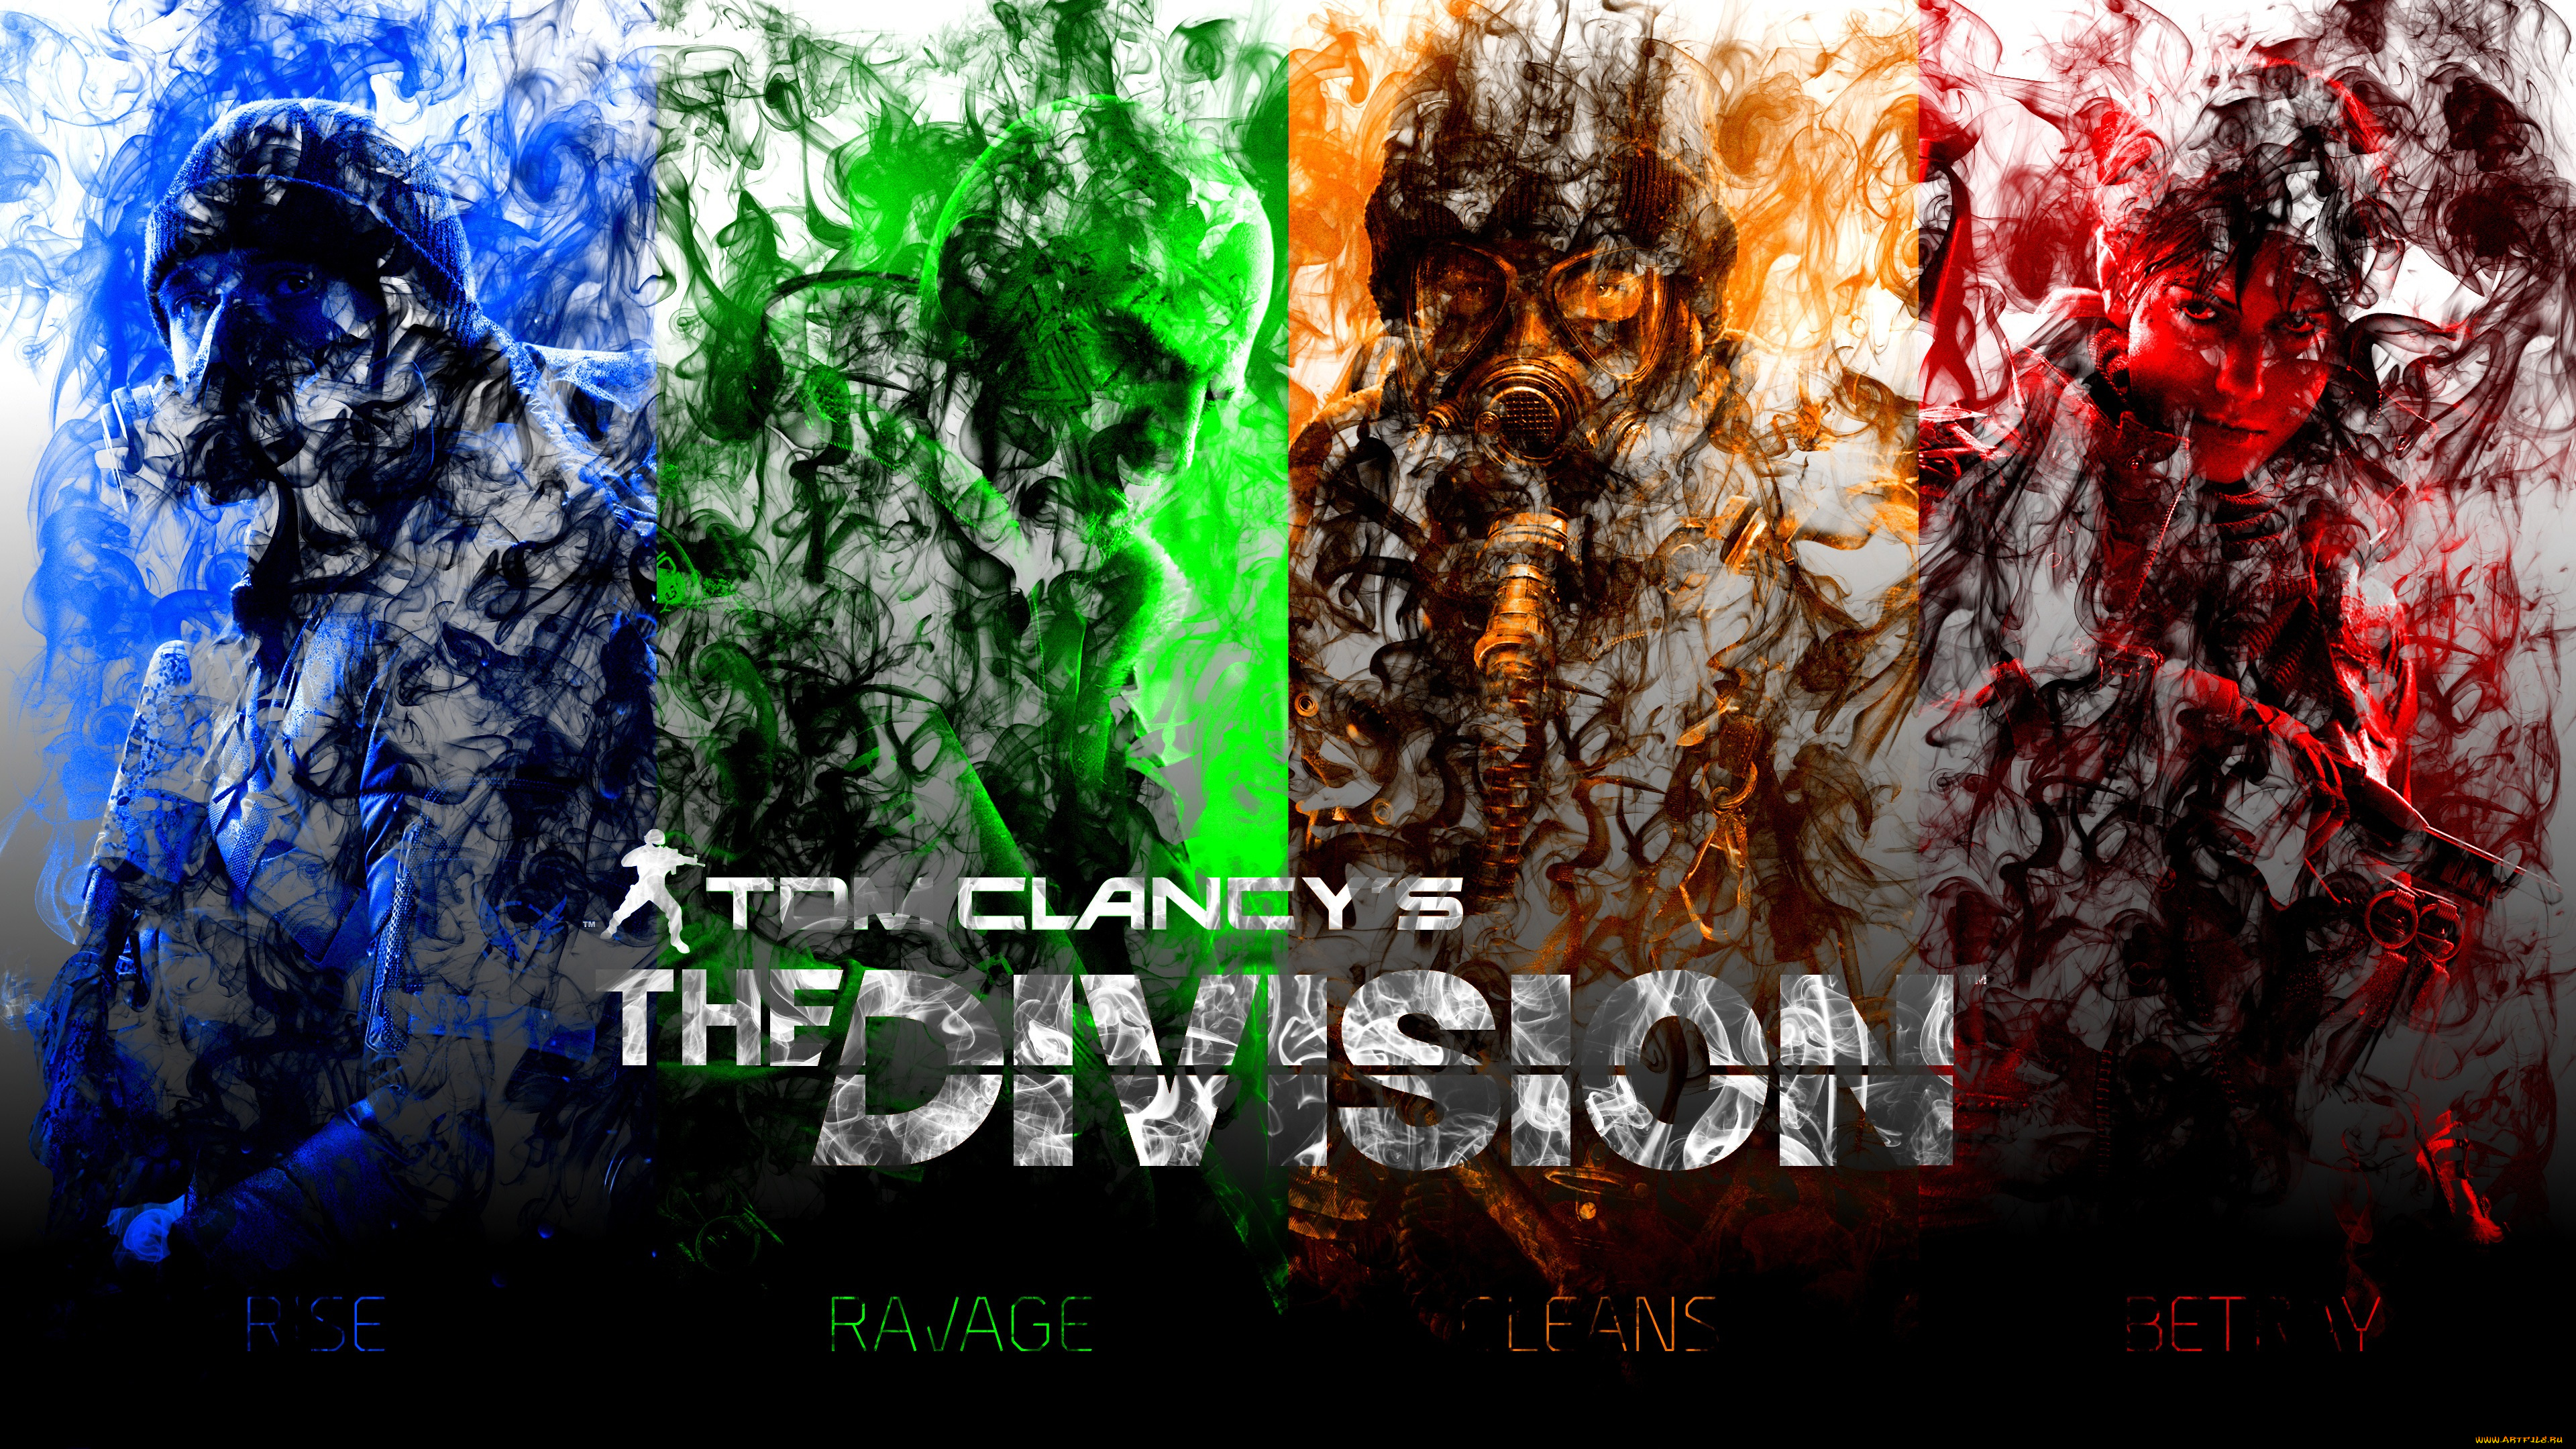 Gaming posters. Постеры видеоигр. Постеры к играм арт. Tom Clancy's the Division posters betray. 2048 X 1152 игры коллаж.